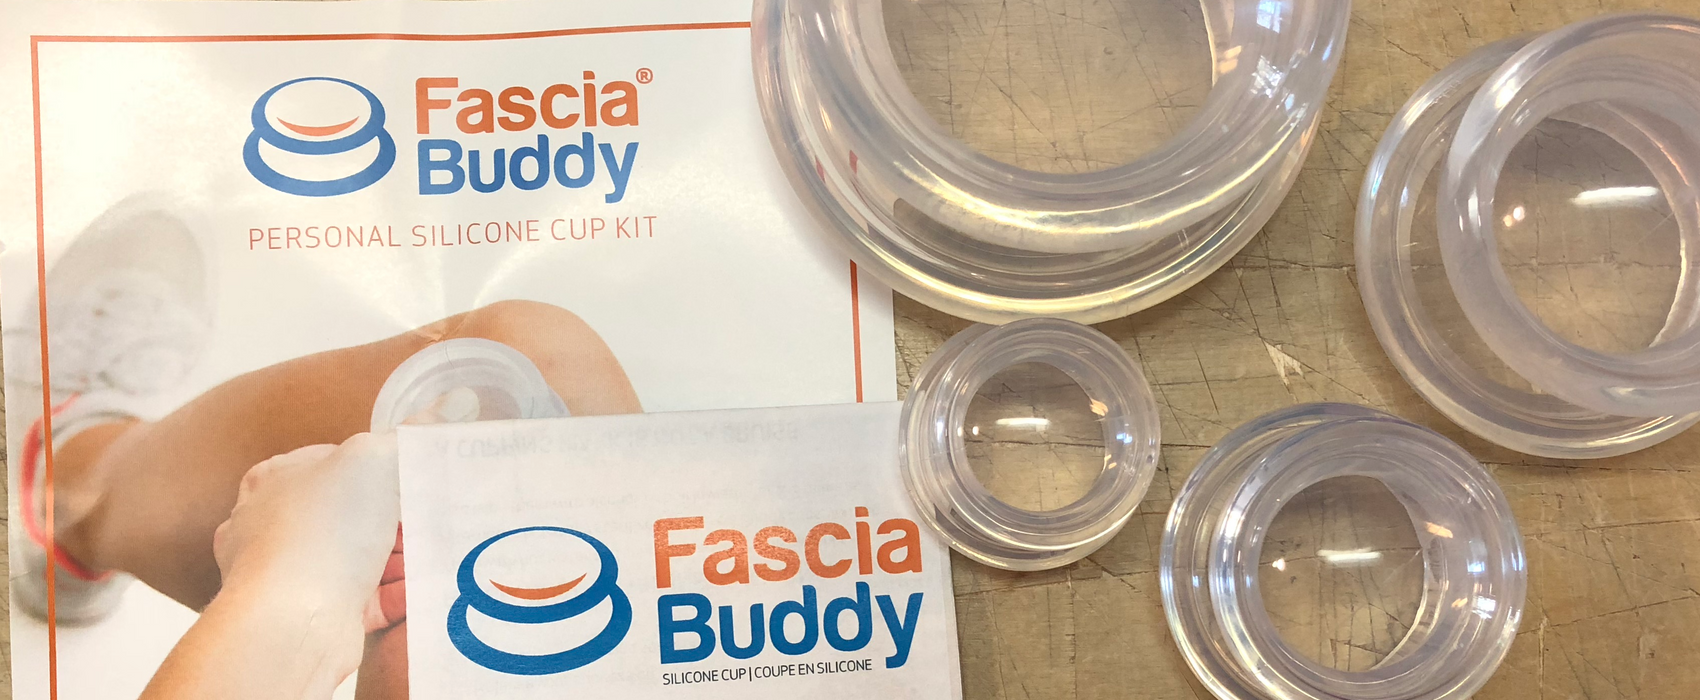 Fascia Buddy Silicone Cupping Set